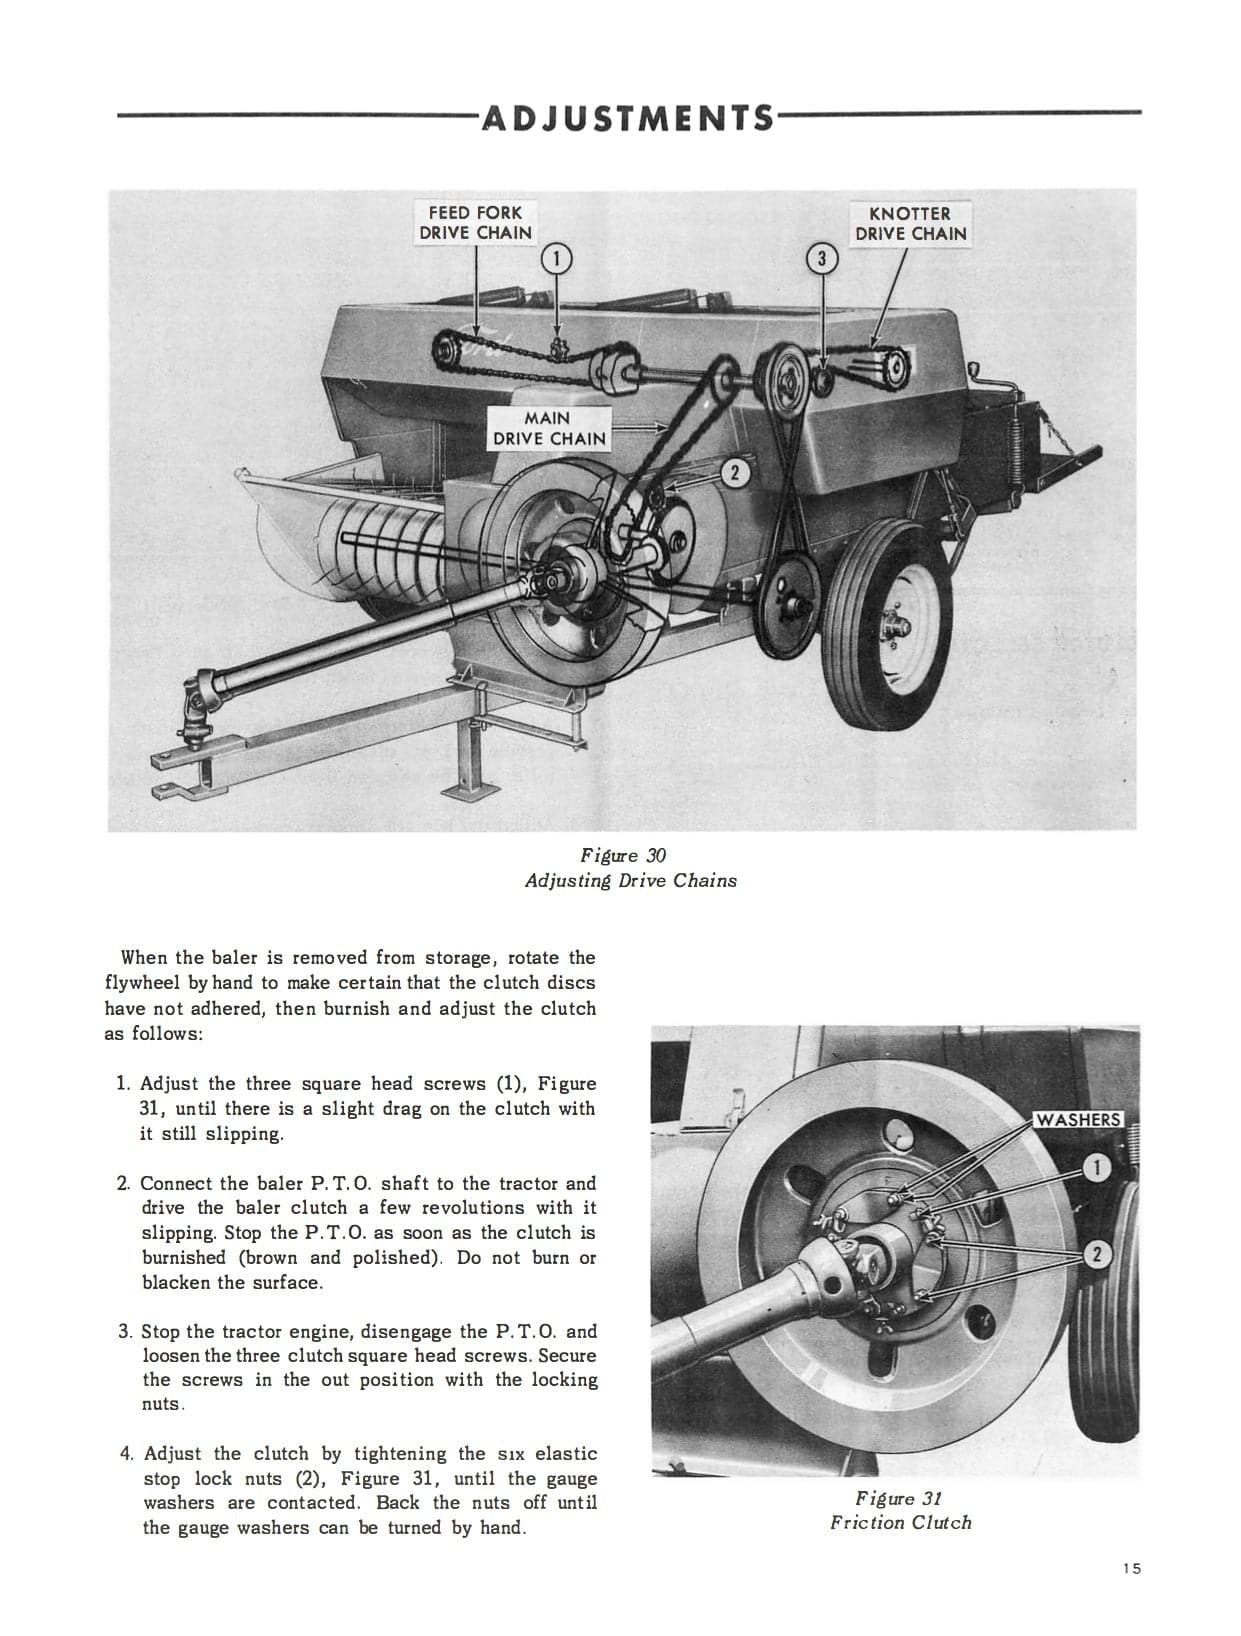 Ford 530 Hay Baler - Operator's Manual - Ag Manuals - A Provider of Digital Farm Manuals - 2